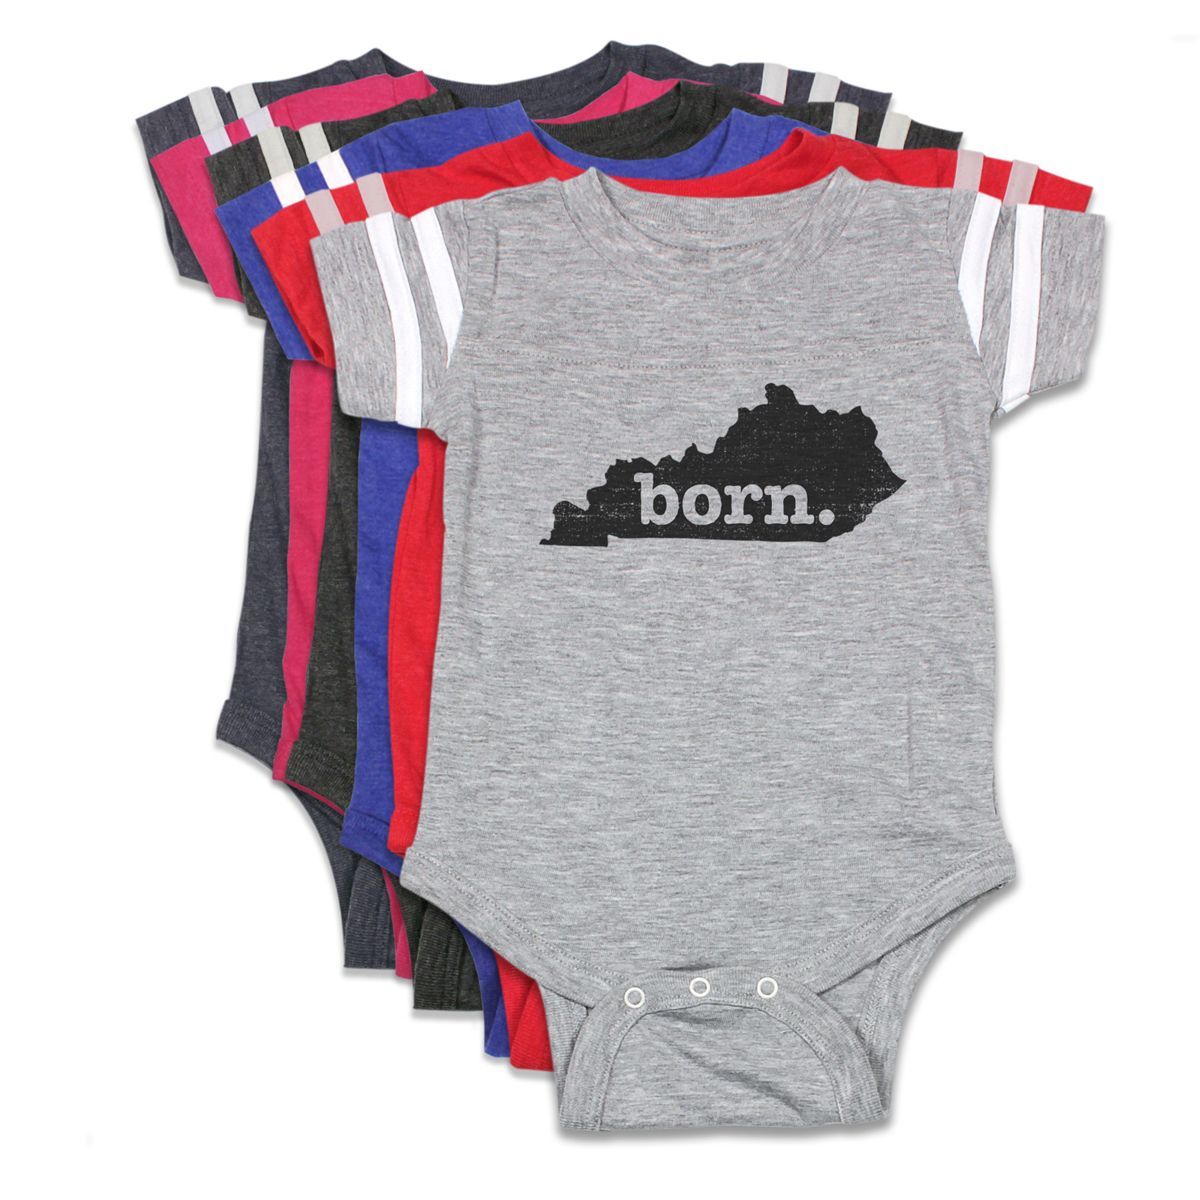 born. Baby Bodysuit - Long Island, NY